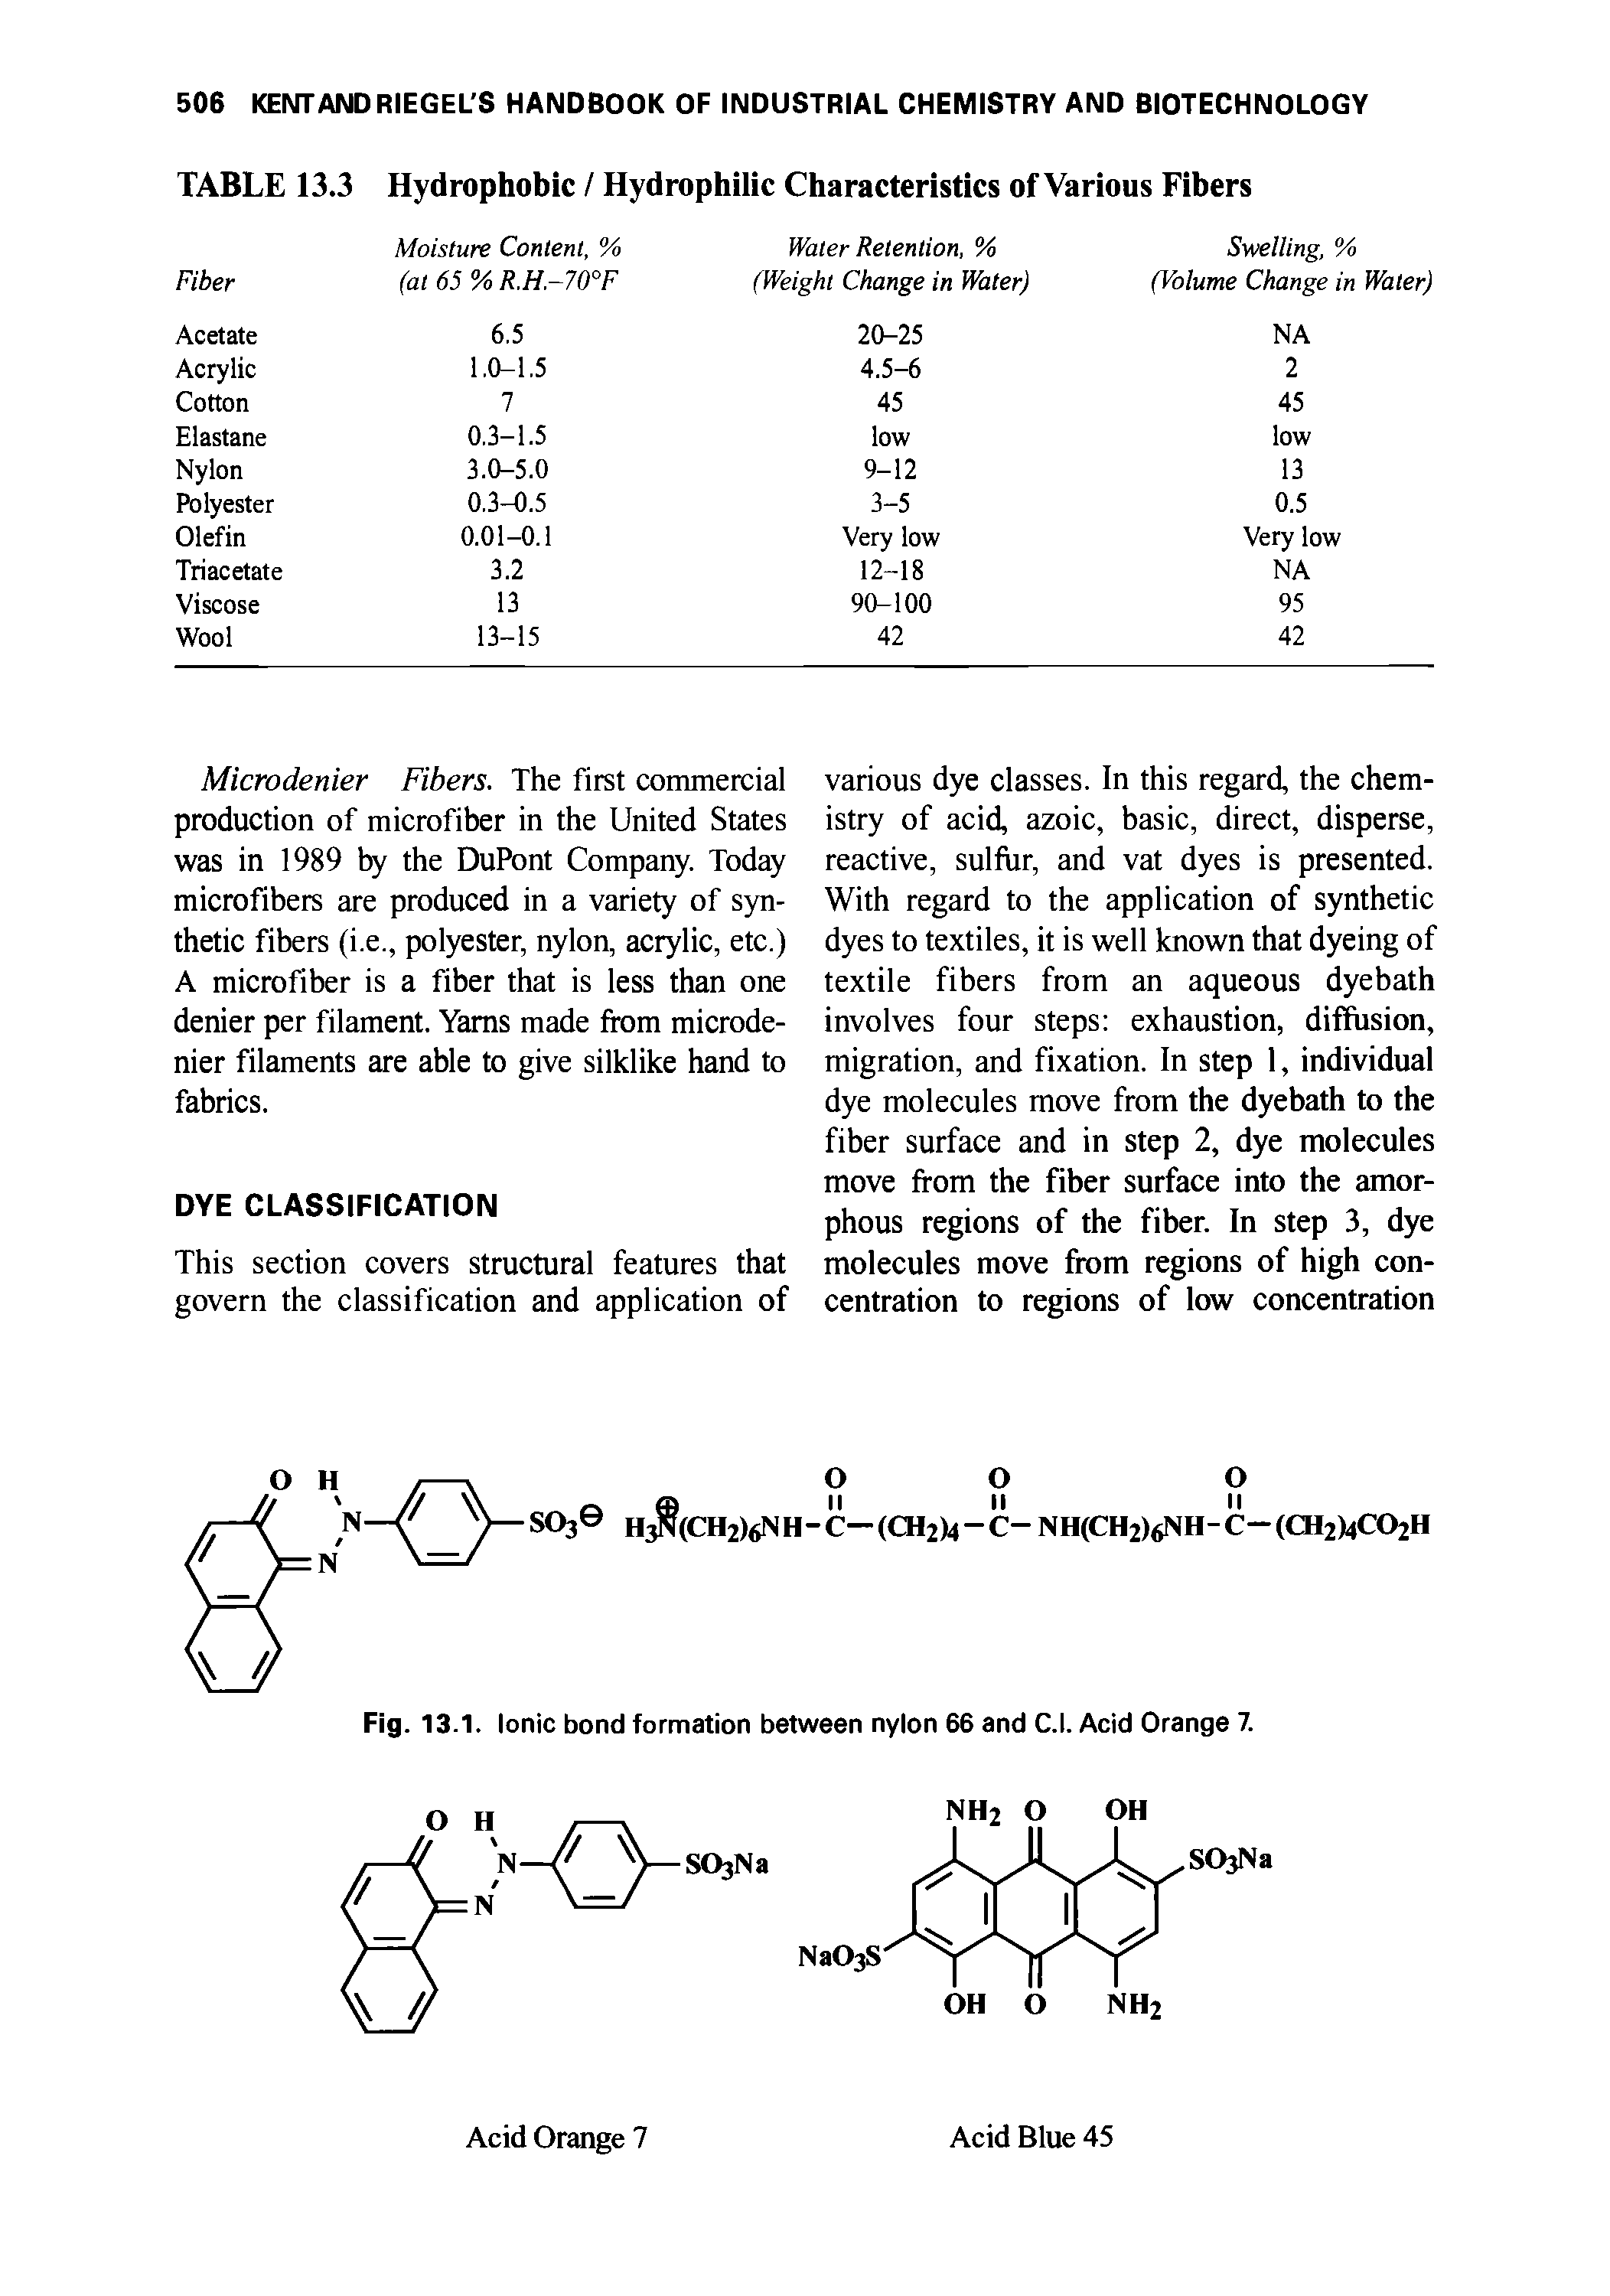 Fig. 13.1. Ionic bond formation between nylon 66 and C.l. Acid Orange 7.